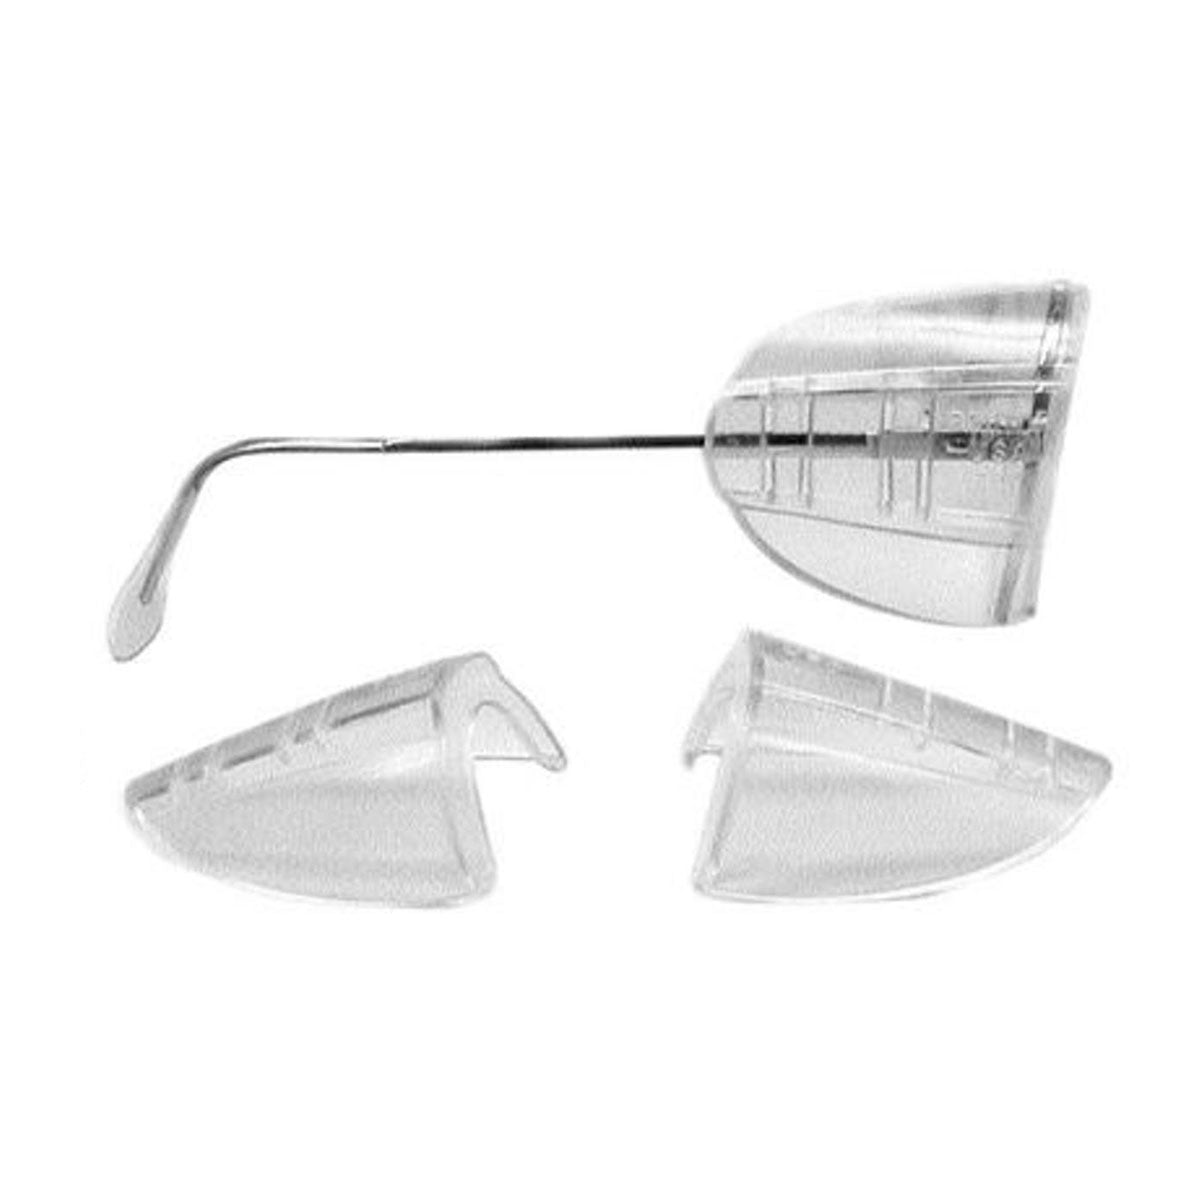  RADNOR® Clear Flex Side Shields Protective Eyewear